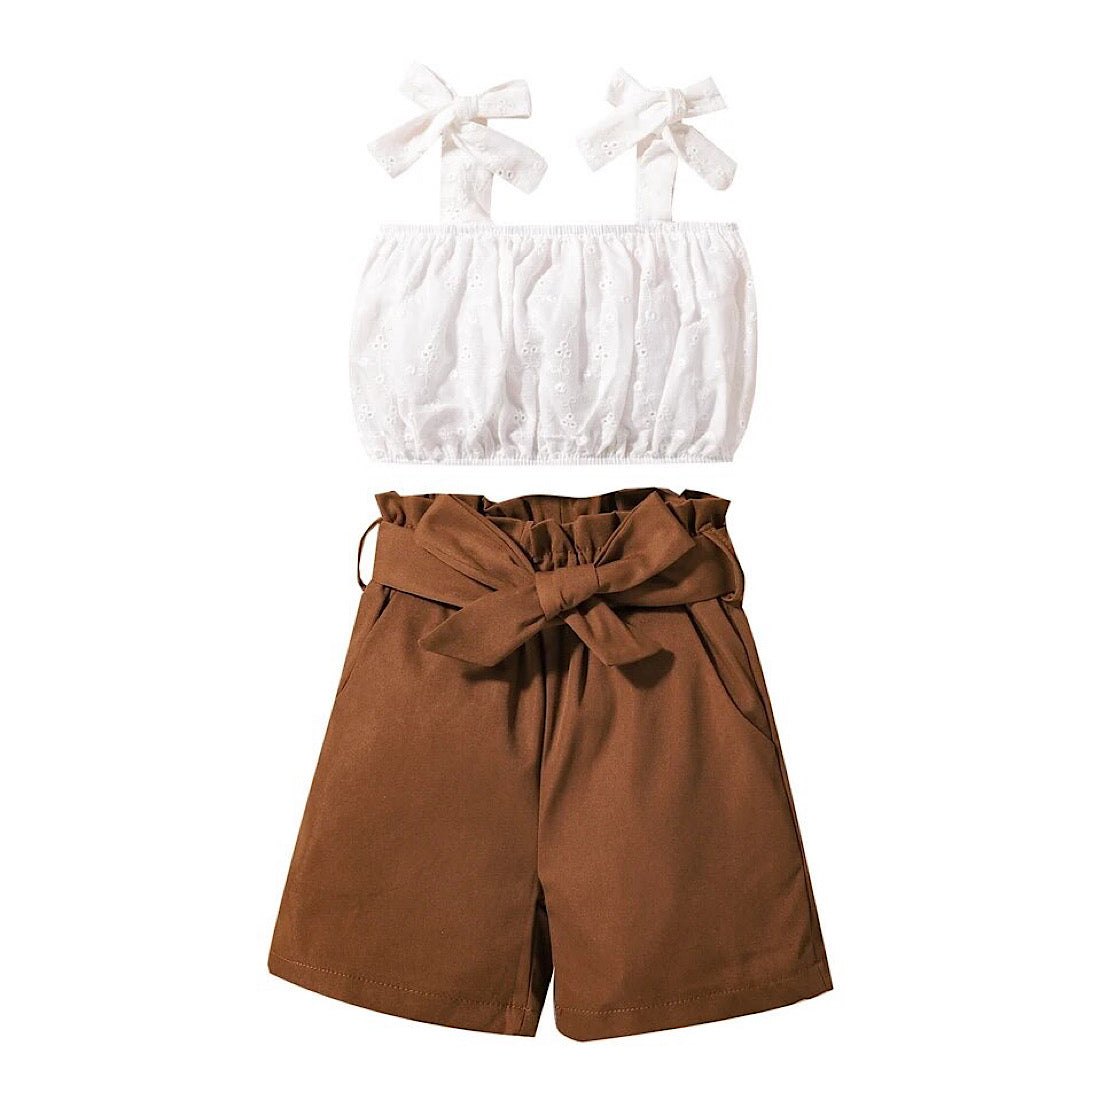 Baby Toddler Girls Eyelet Crop Top and Belted Brown Shorts Set, Model